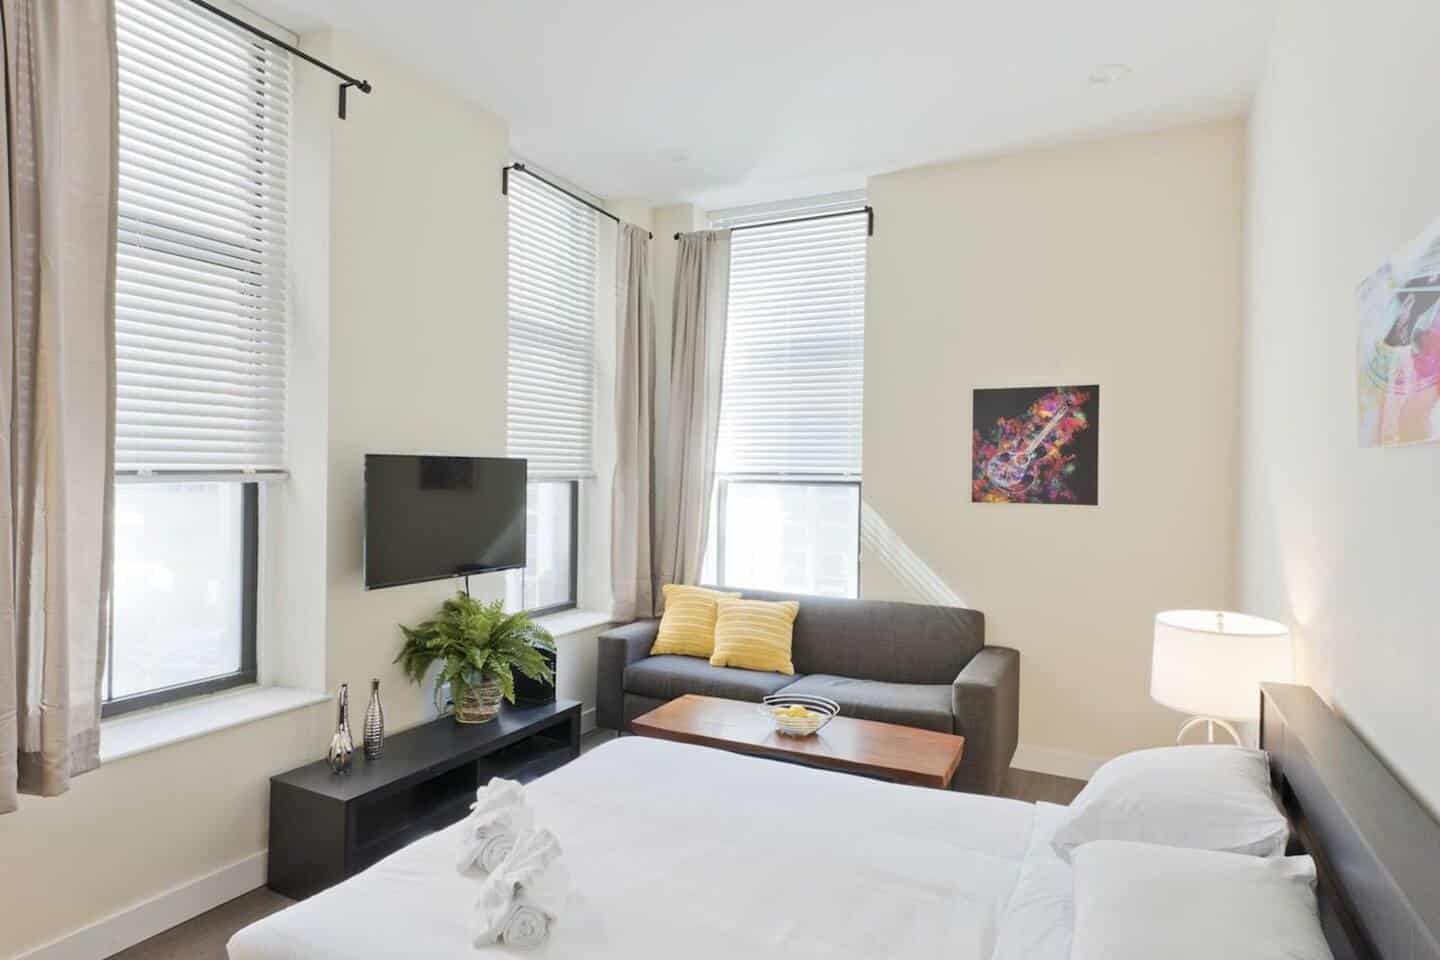 Image of Airbnb rental in Boston, Massachusetts